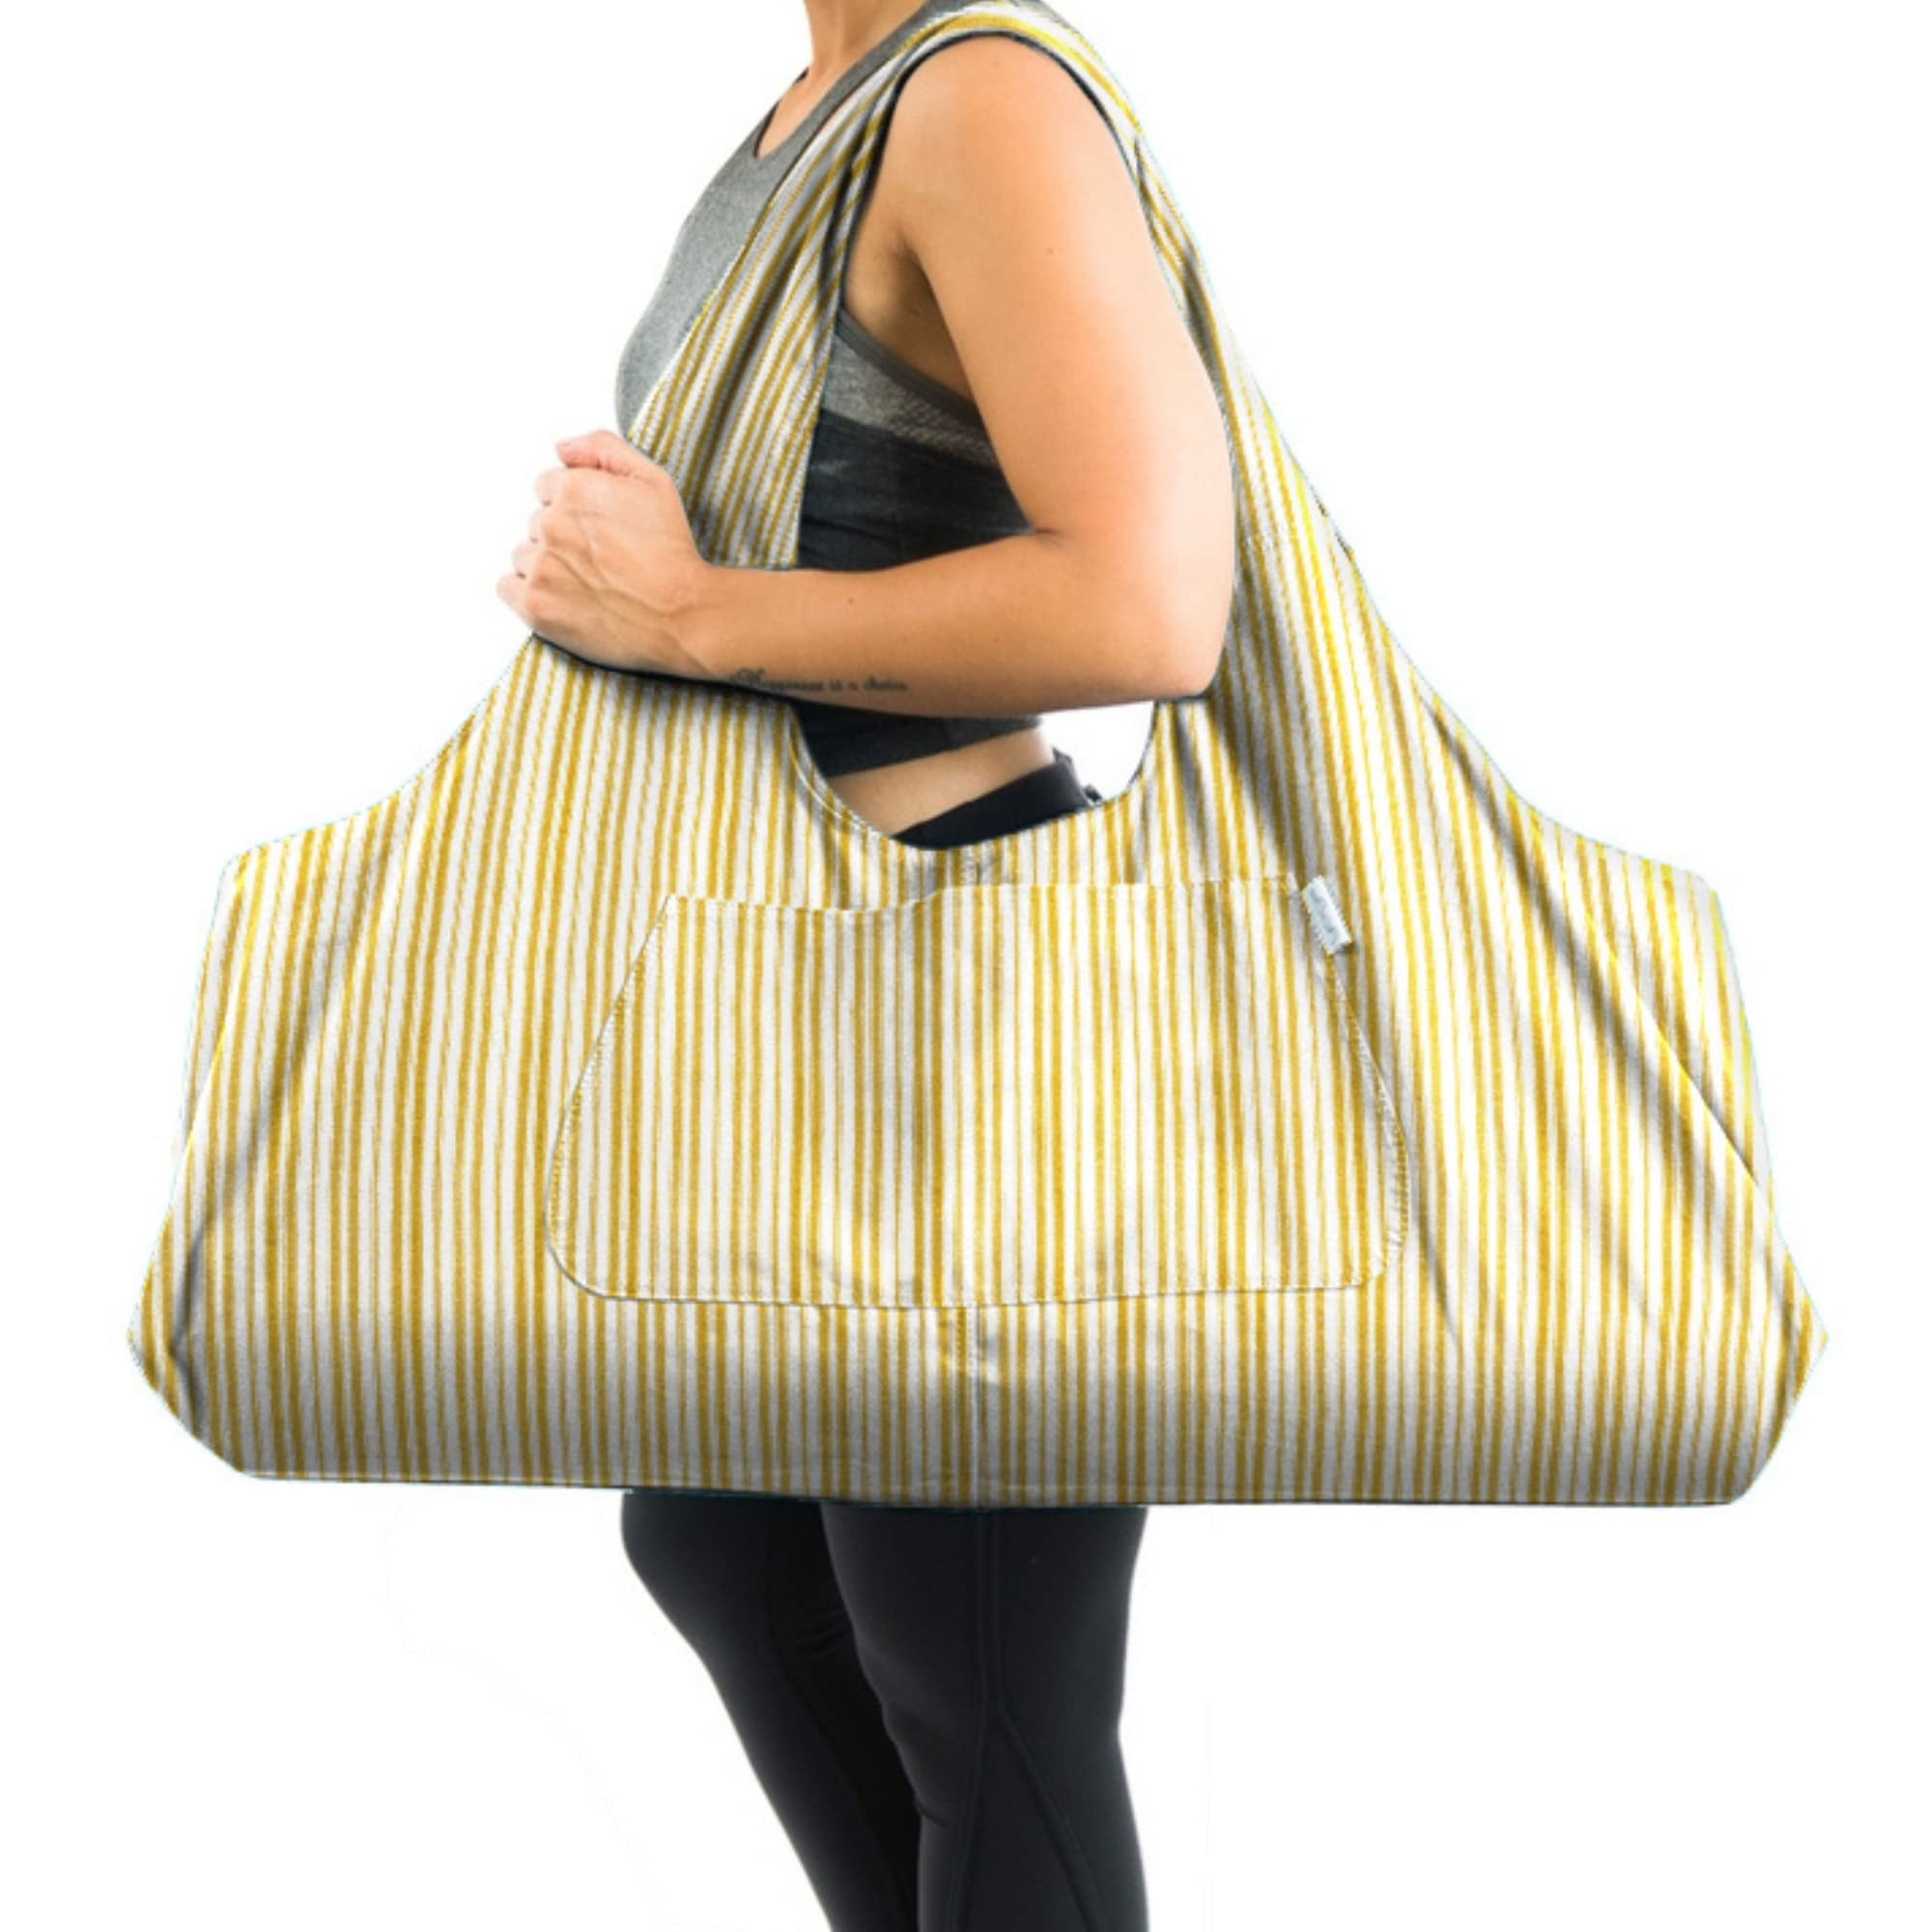 Yogiii Large Yoga Mat Bag The Original Yogiiitotepro Tote Sling Carrier W  Side P for sale online